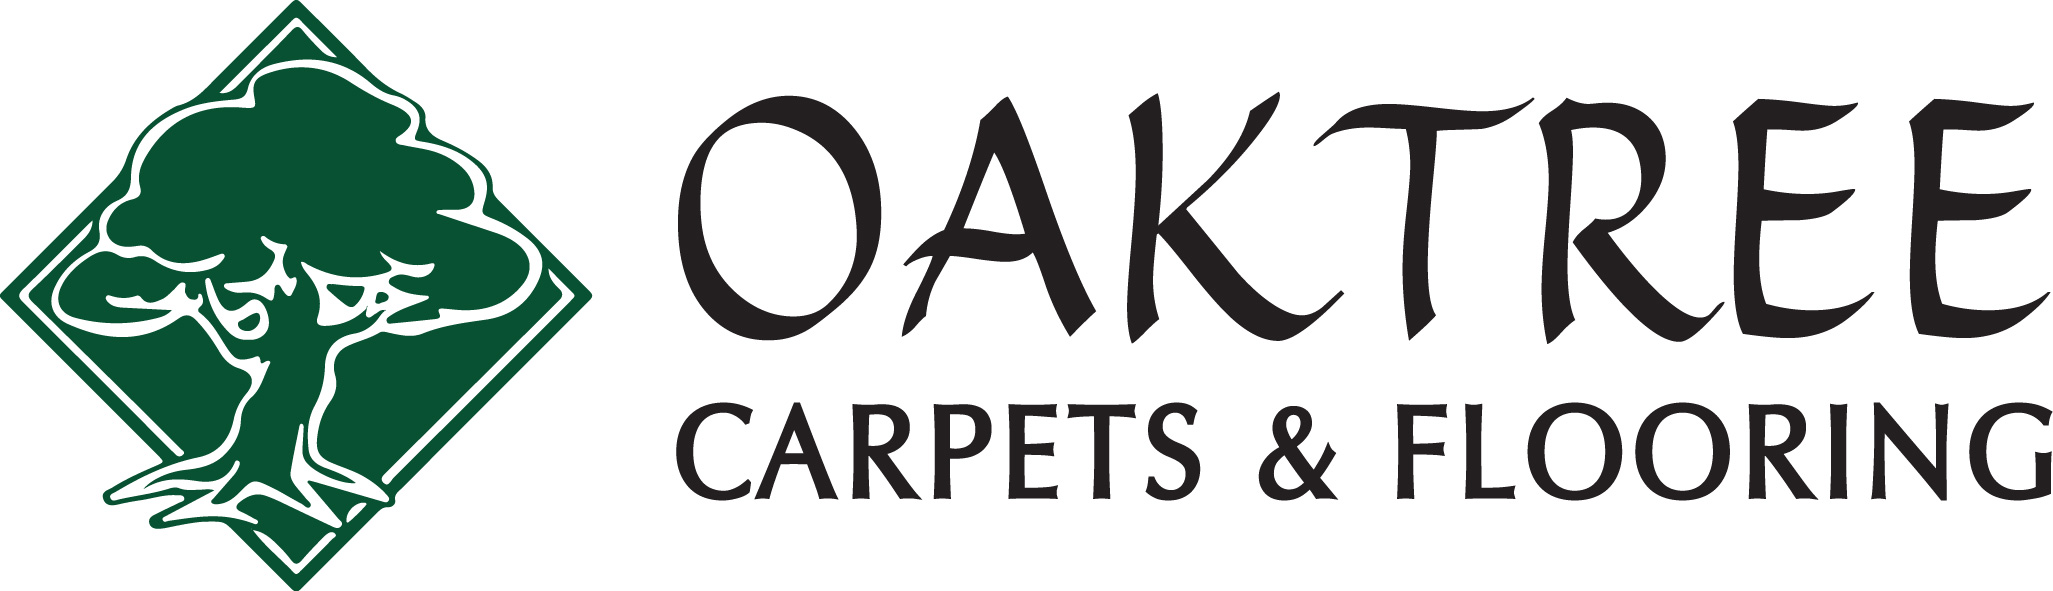 Oaktree Carpets & Flooring Solutions